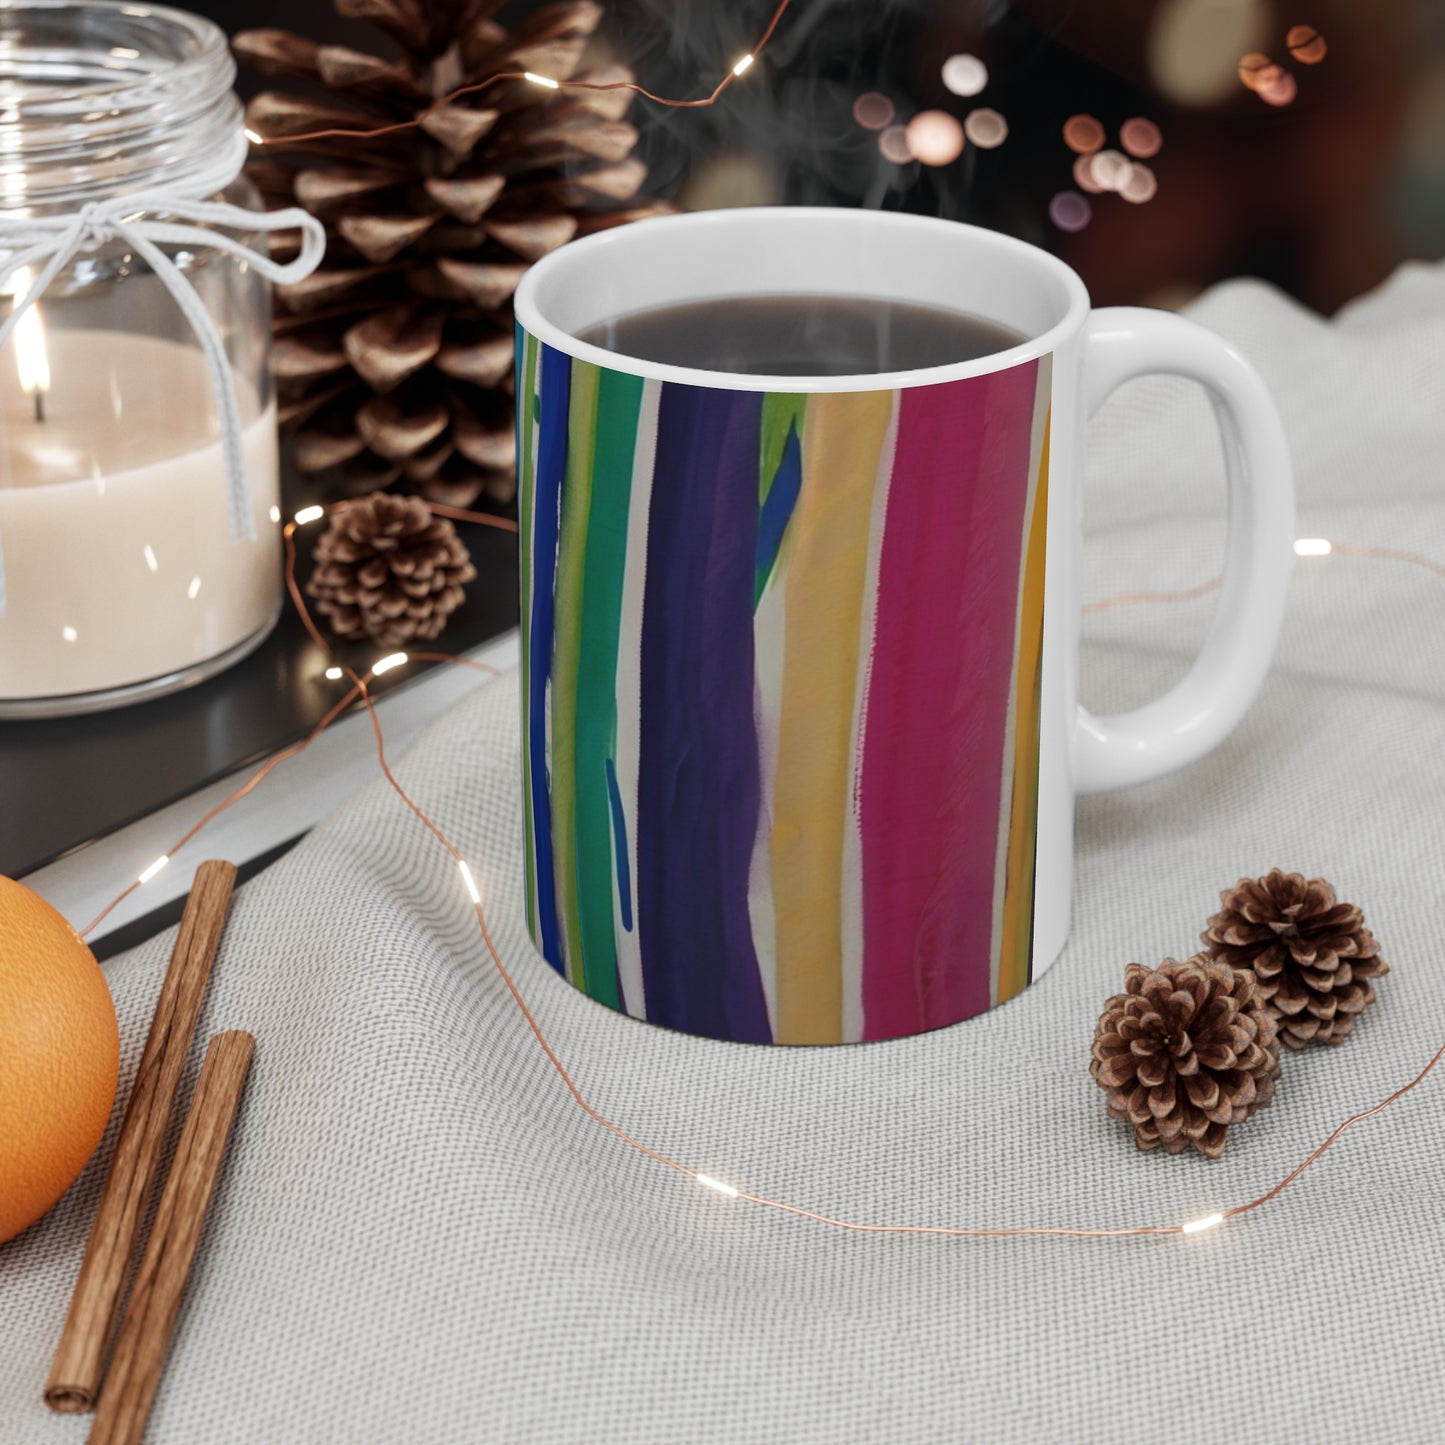 Colourful Paint Lines Mug - Ceramic Coffee Mug 11oz